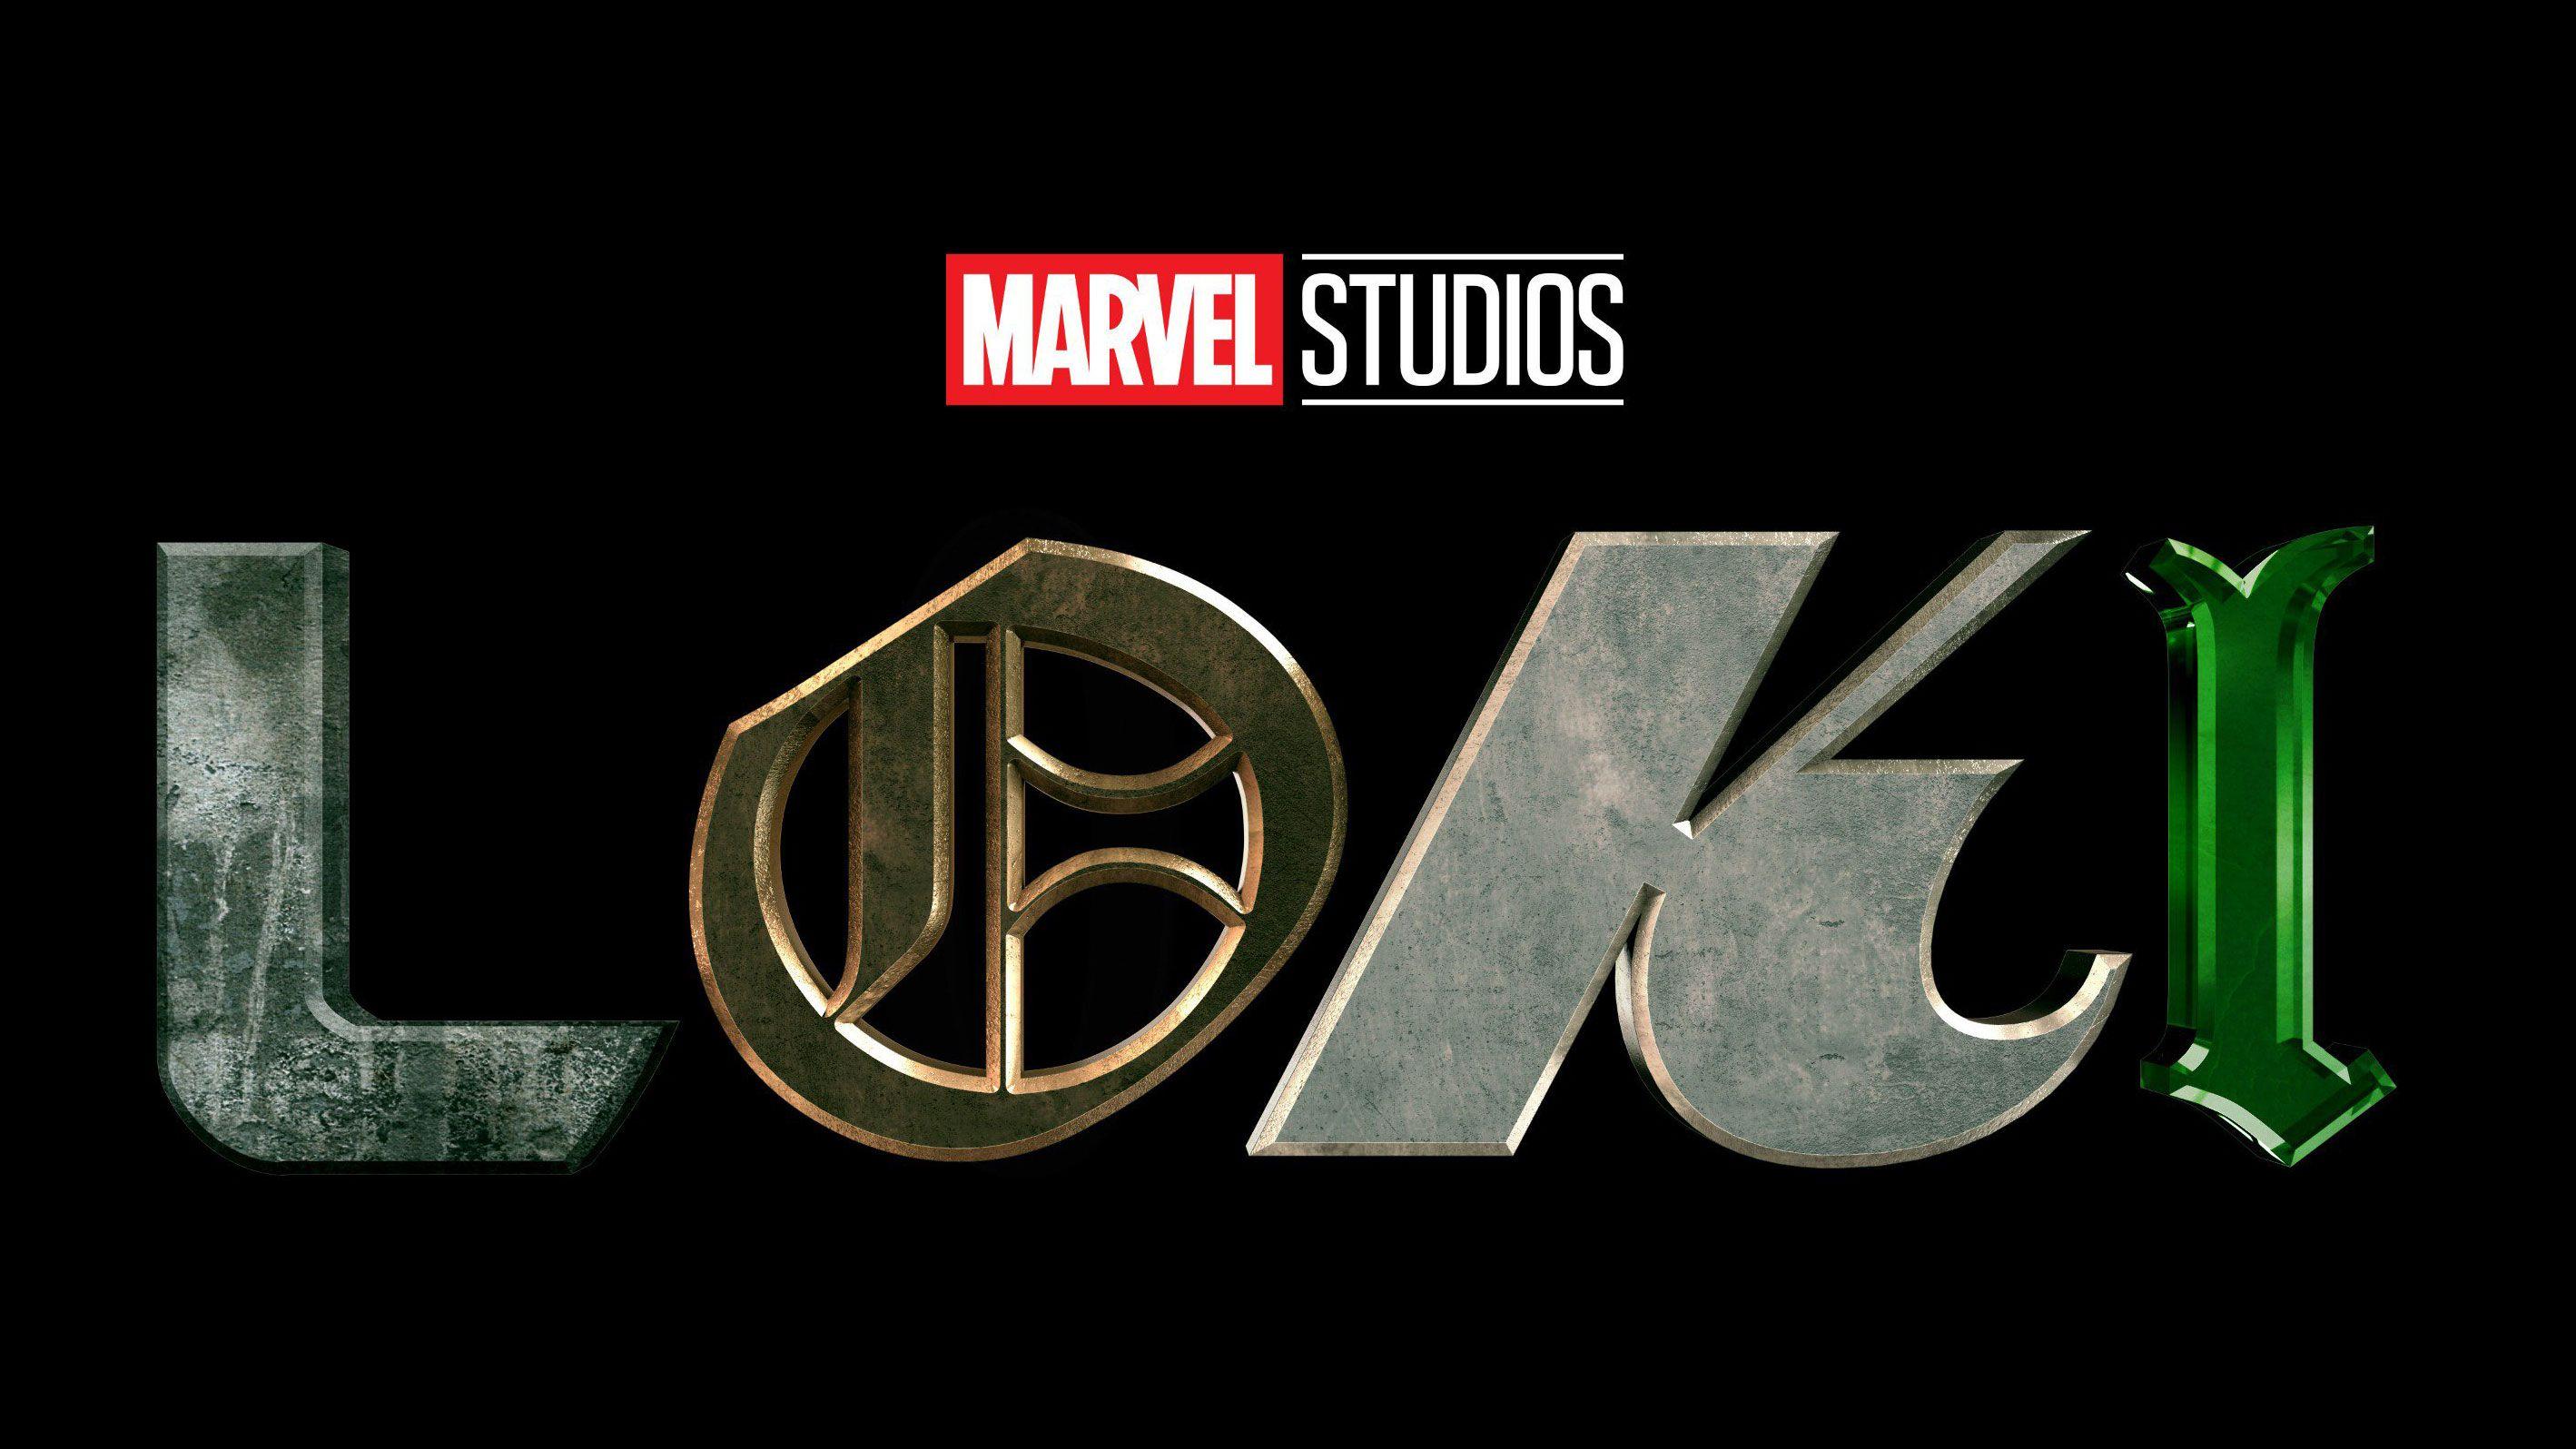 Loki Logo - New Marvel logos include this Loki abomination